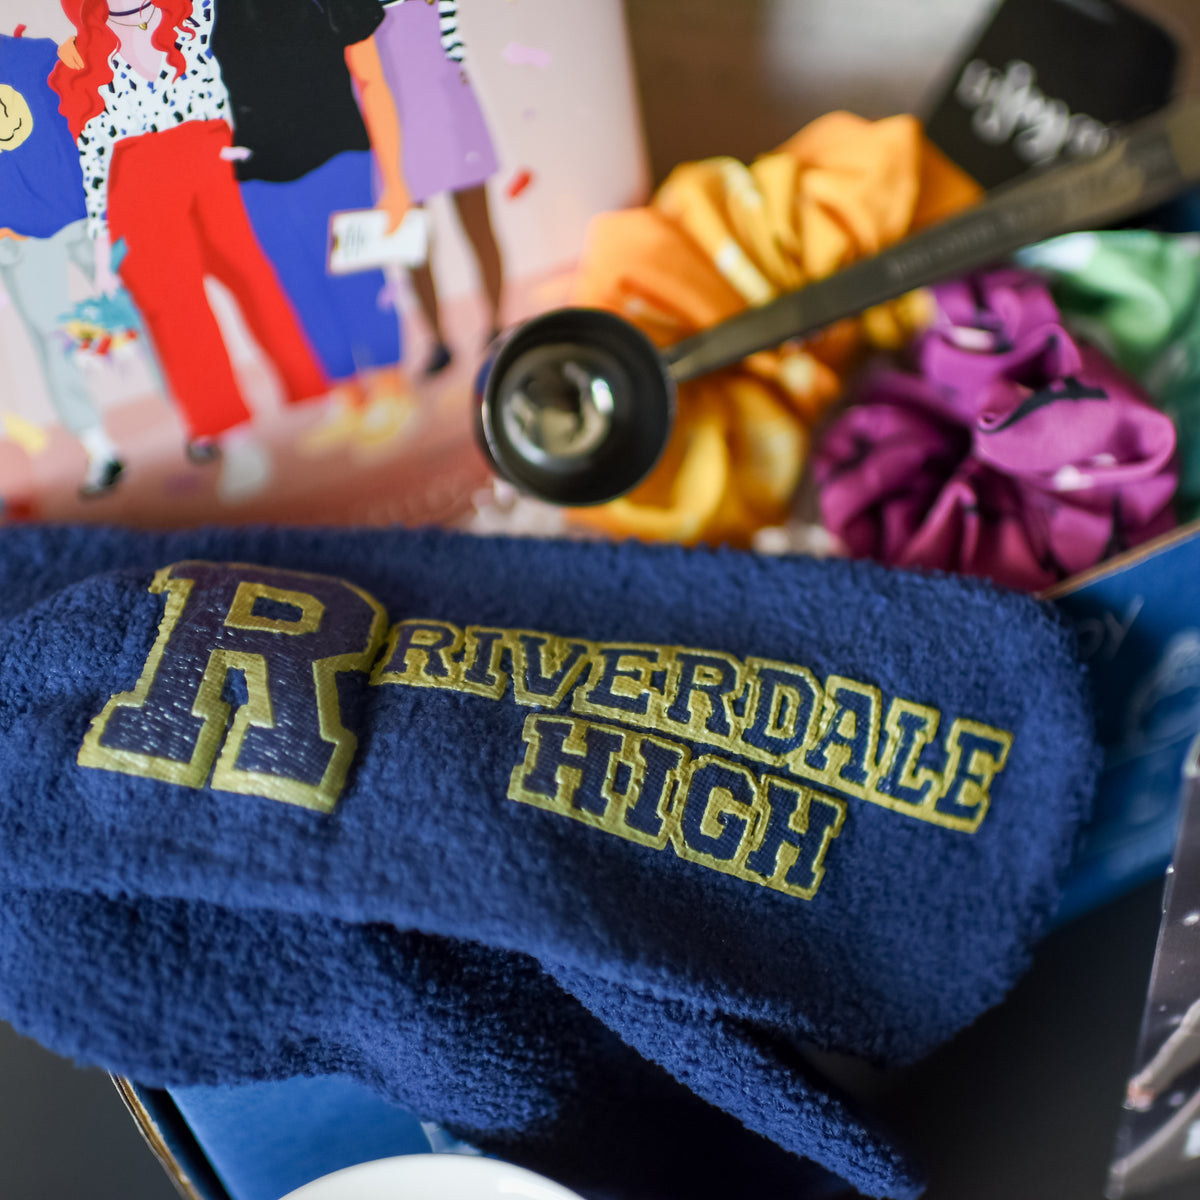 Blue socks featuring the R Riverdale High logo